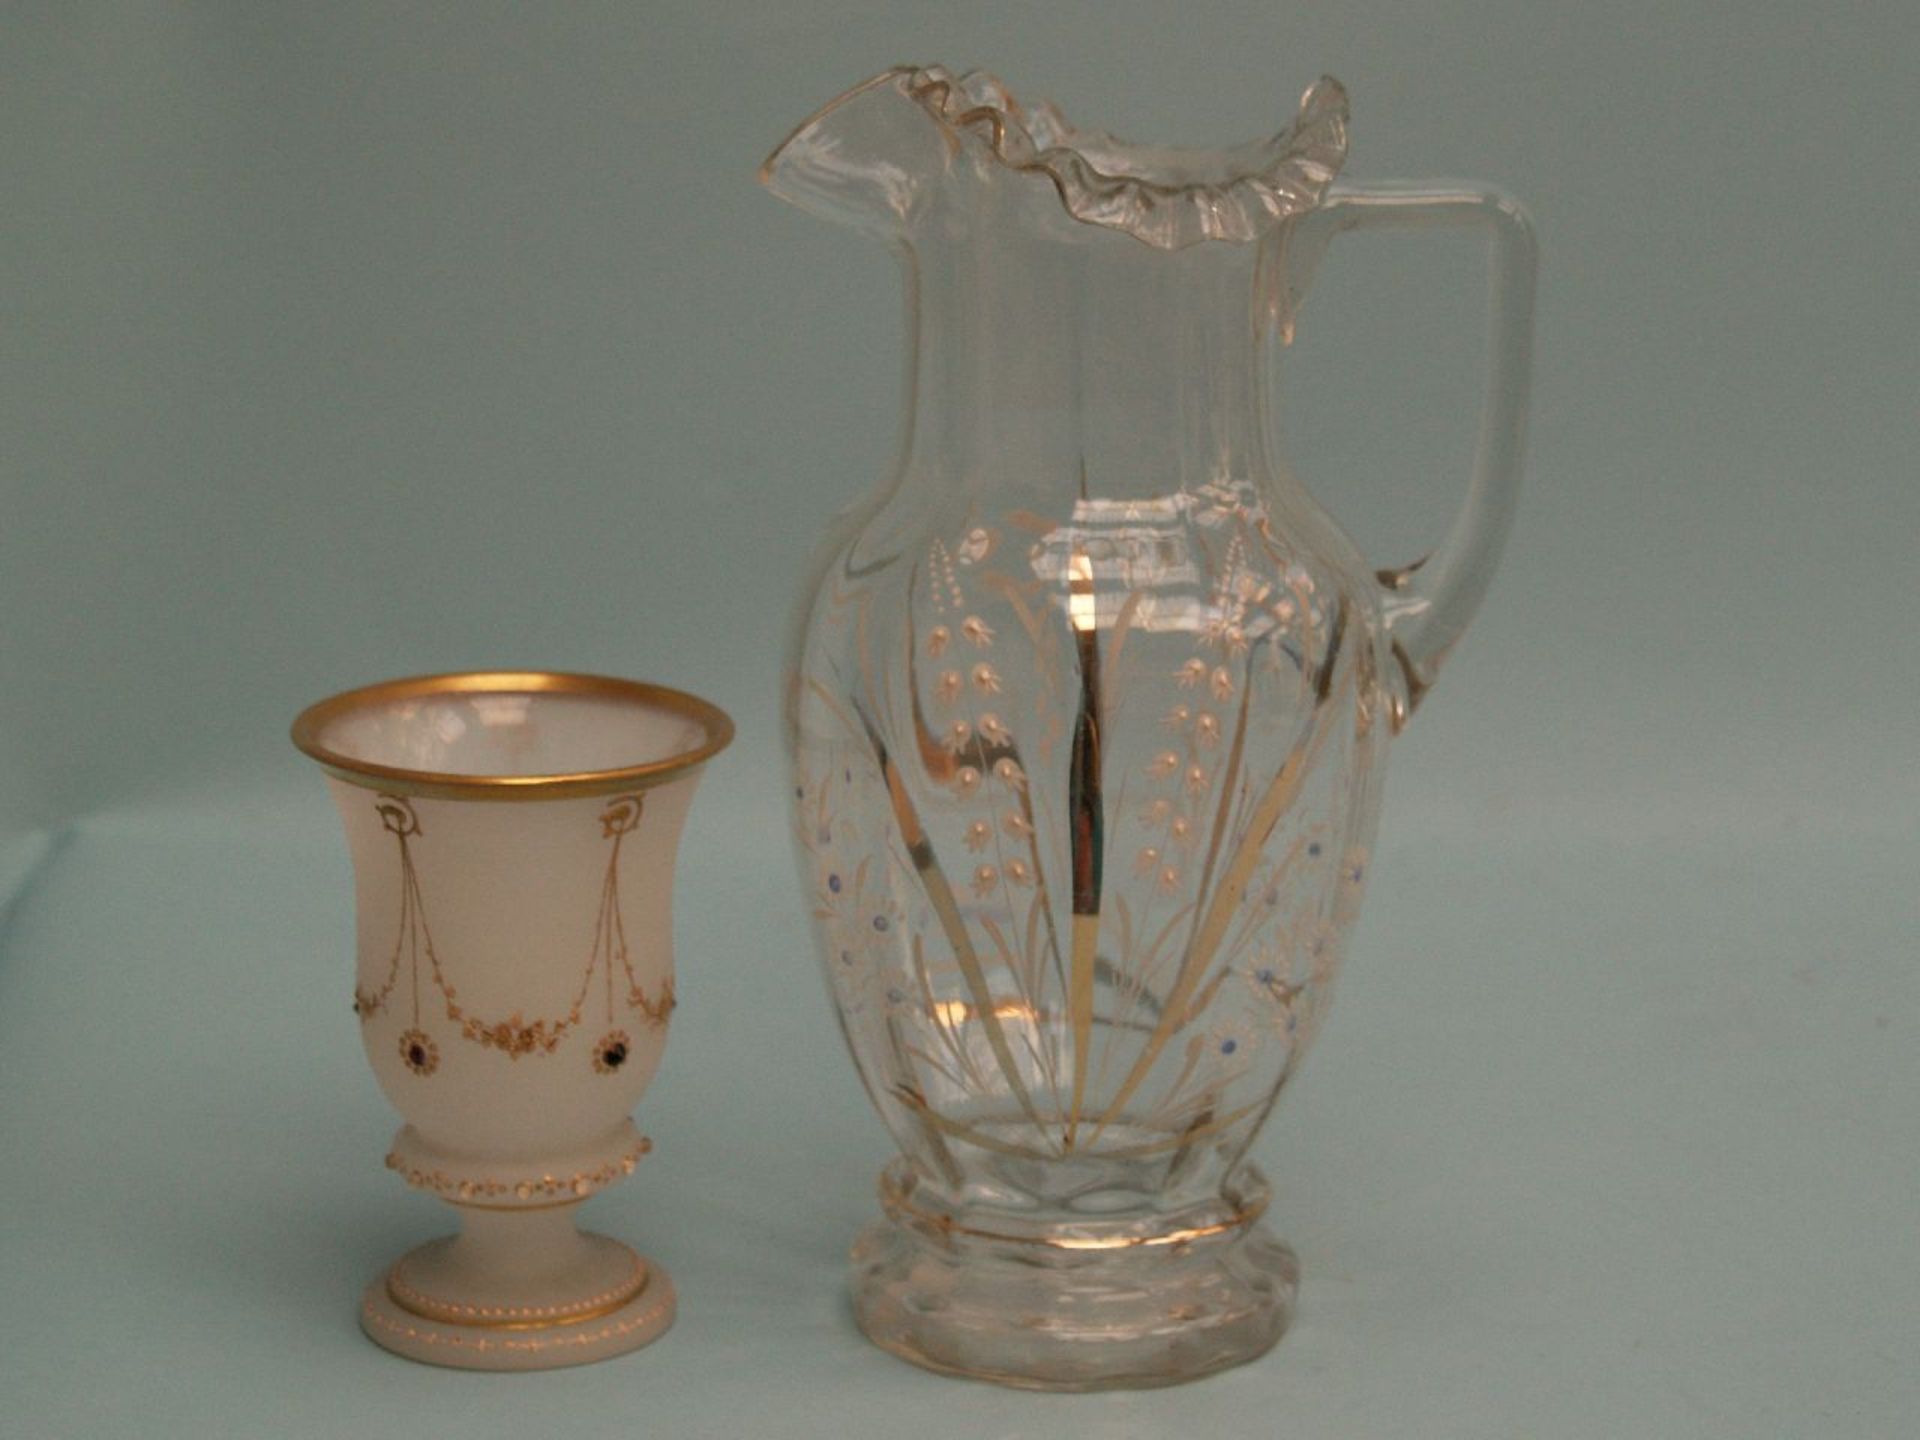 Glaskrug & Kelchglas - Glaskrug:Anfang 20.Jh., farbloses Glas längsoptisch geblasen,Abriss im